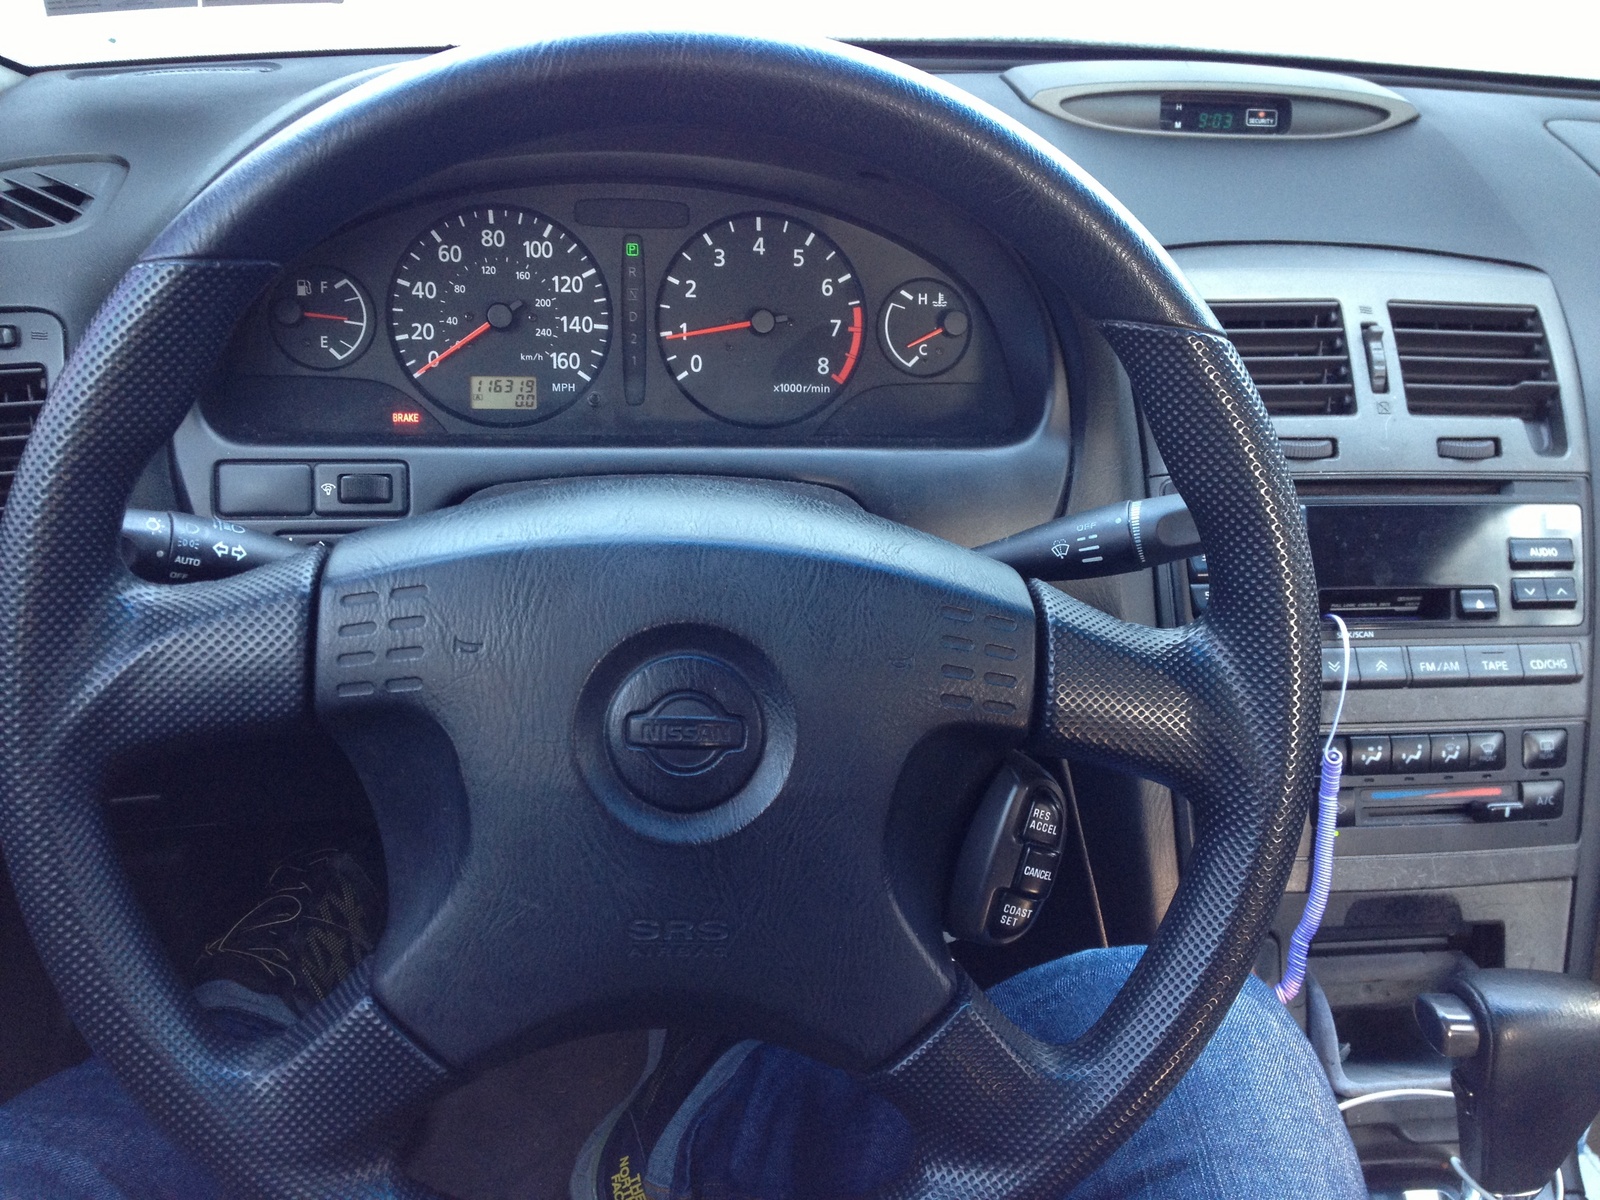 2000 Nissan maxima se interior #3